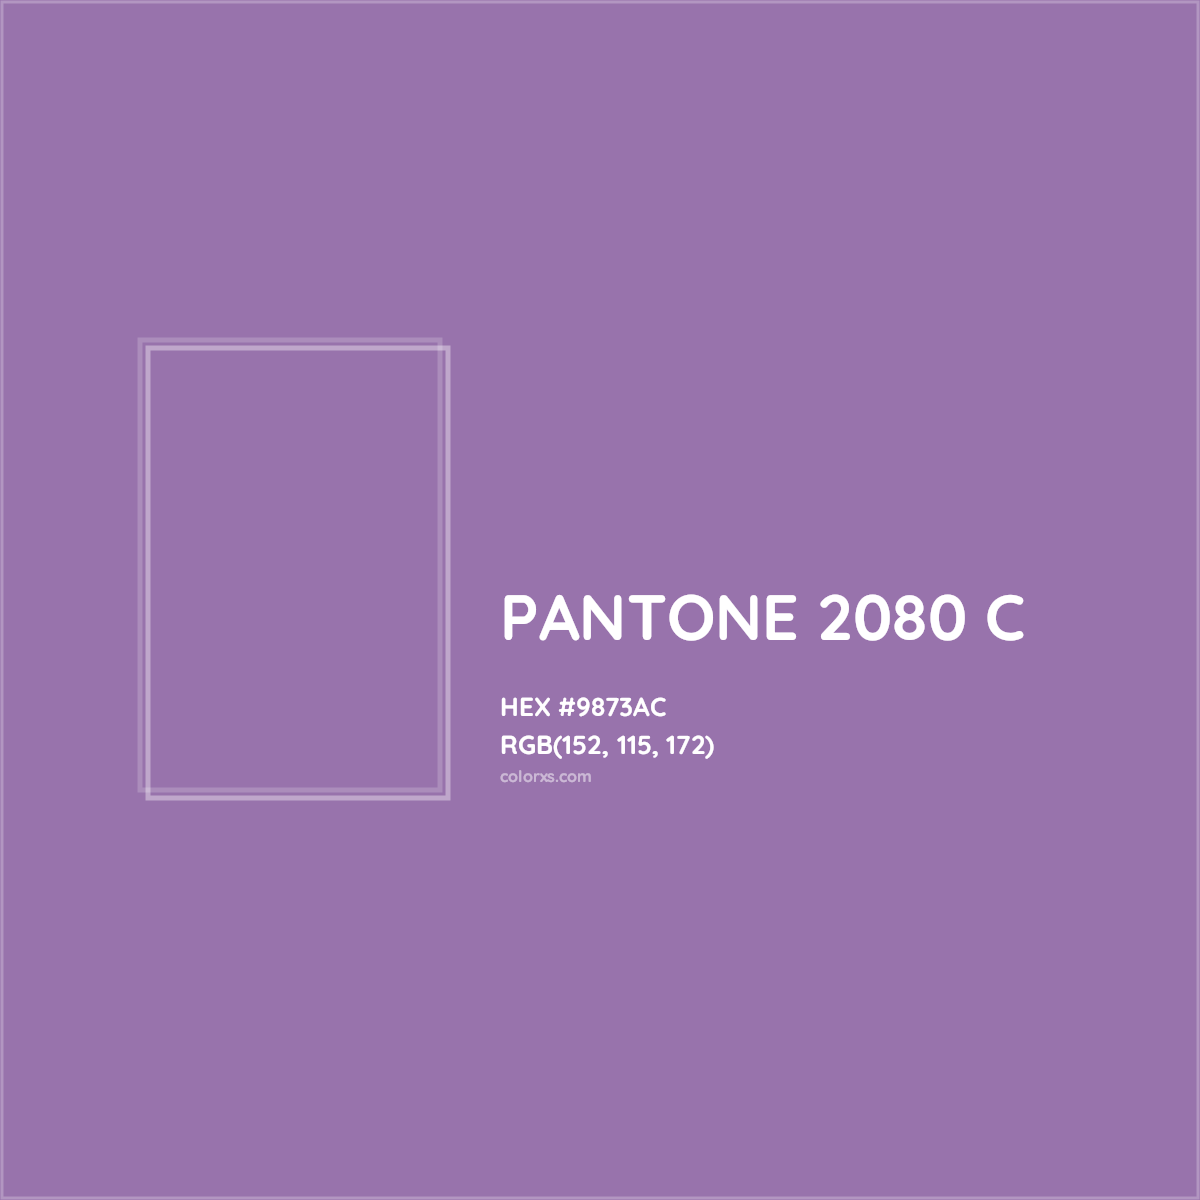 HEX #9873AC PANTONE 2080 C CMS Pantone PMS - Color Code